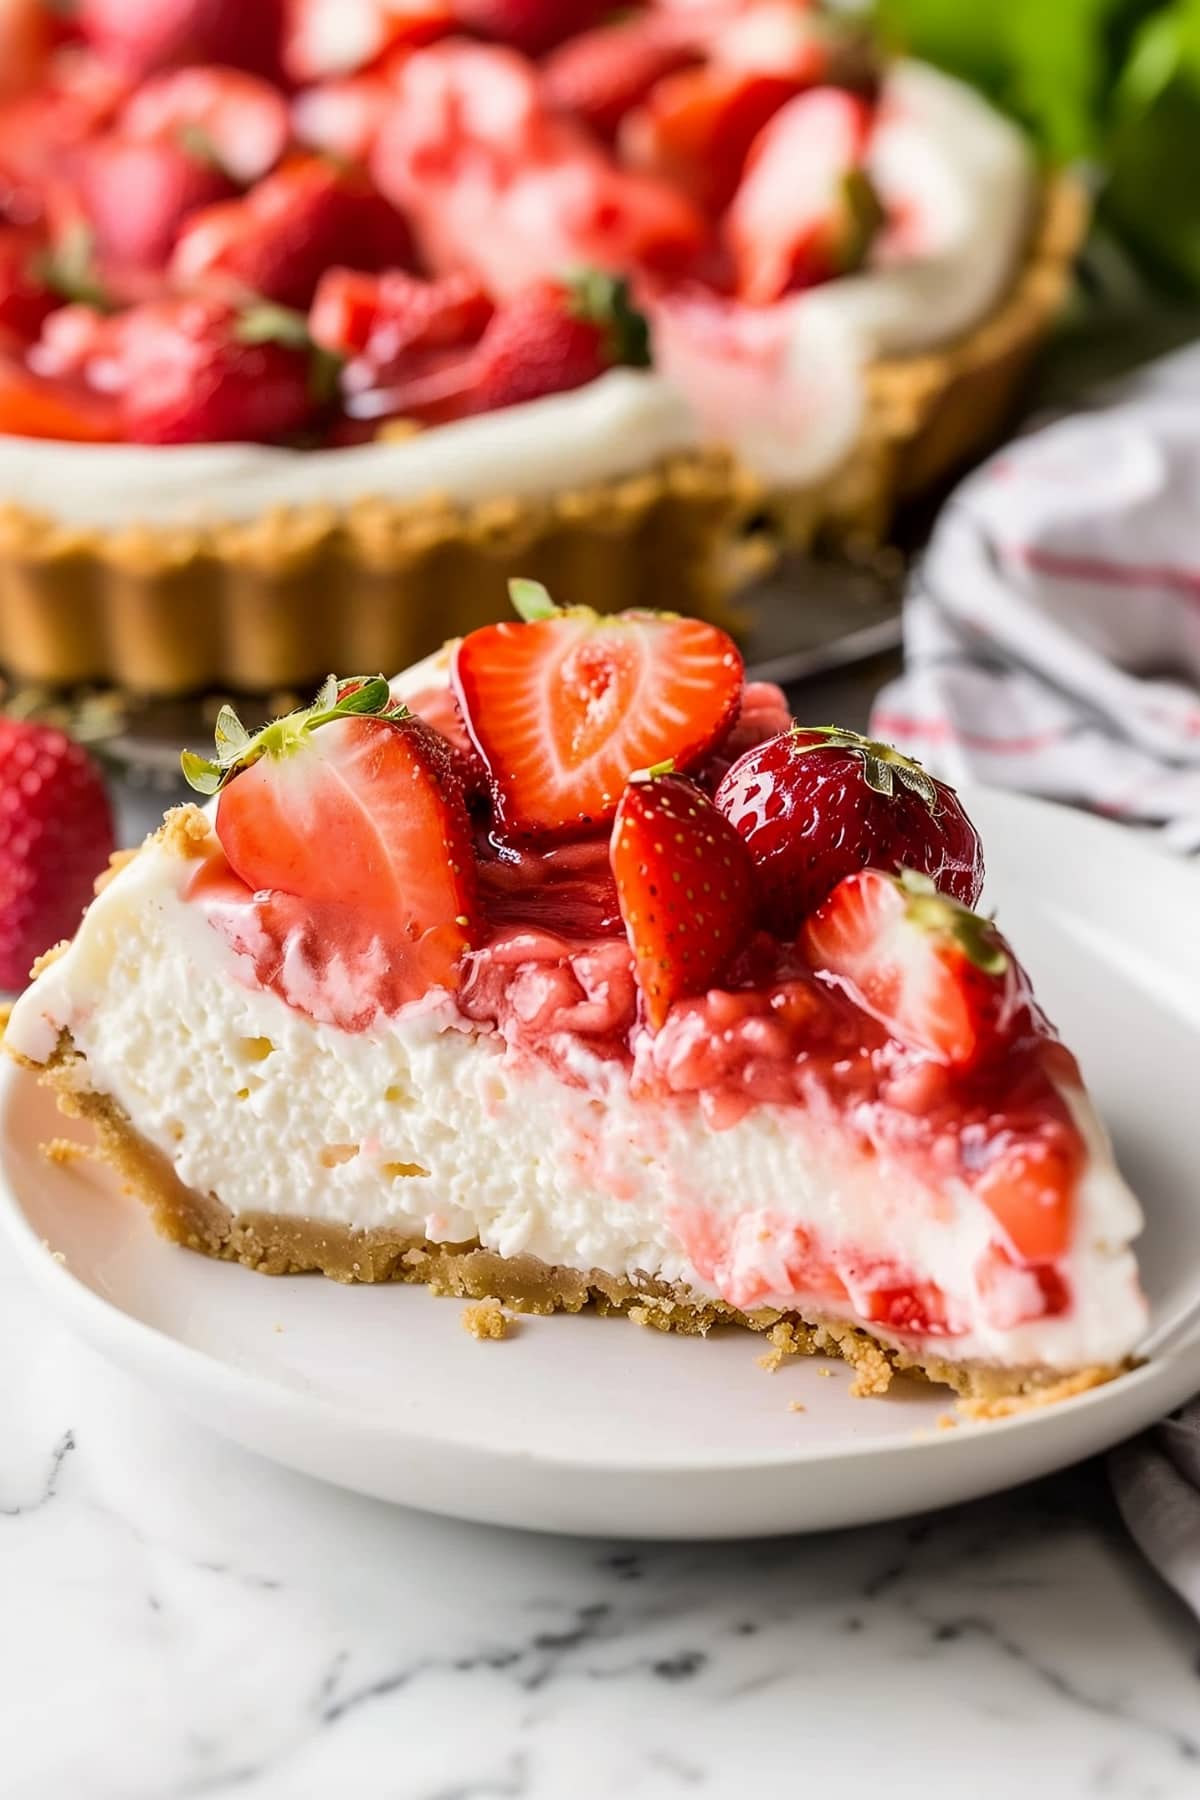 Sweet and creamy homemade strawberry cheesecake